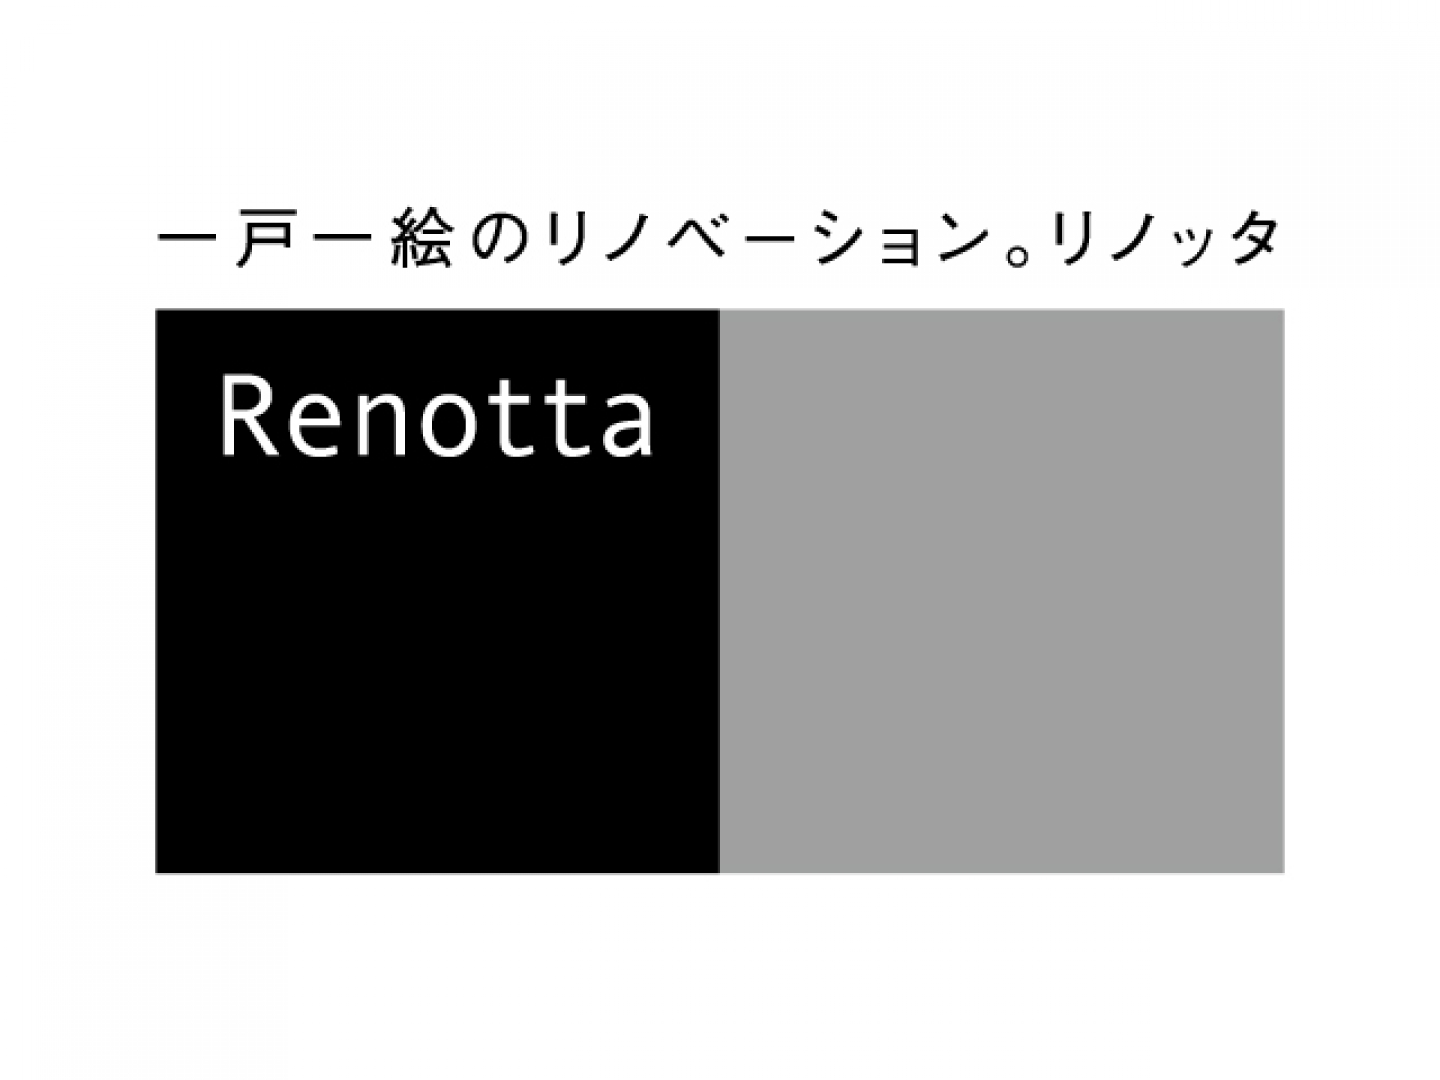 RENOTTA-logo